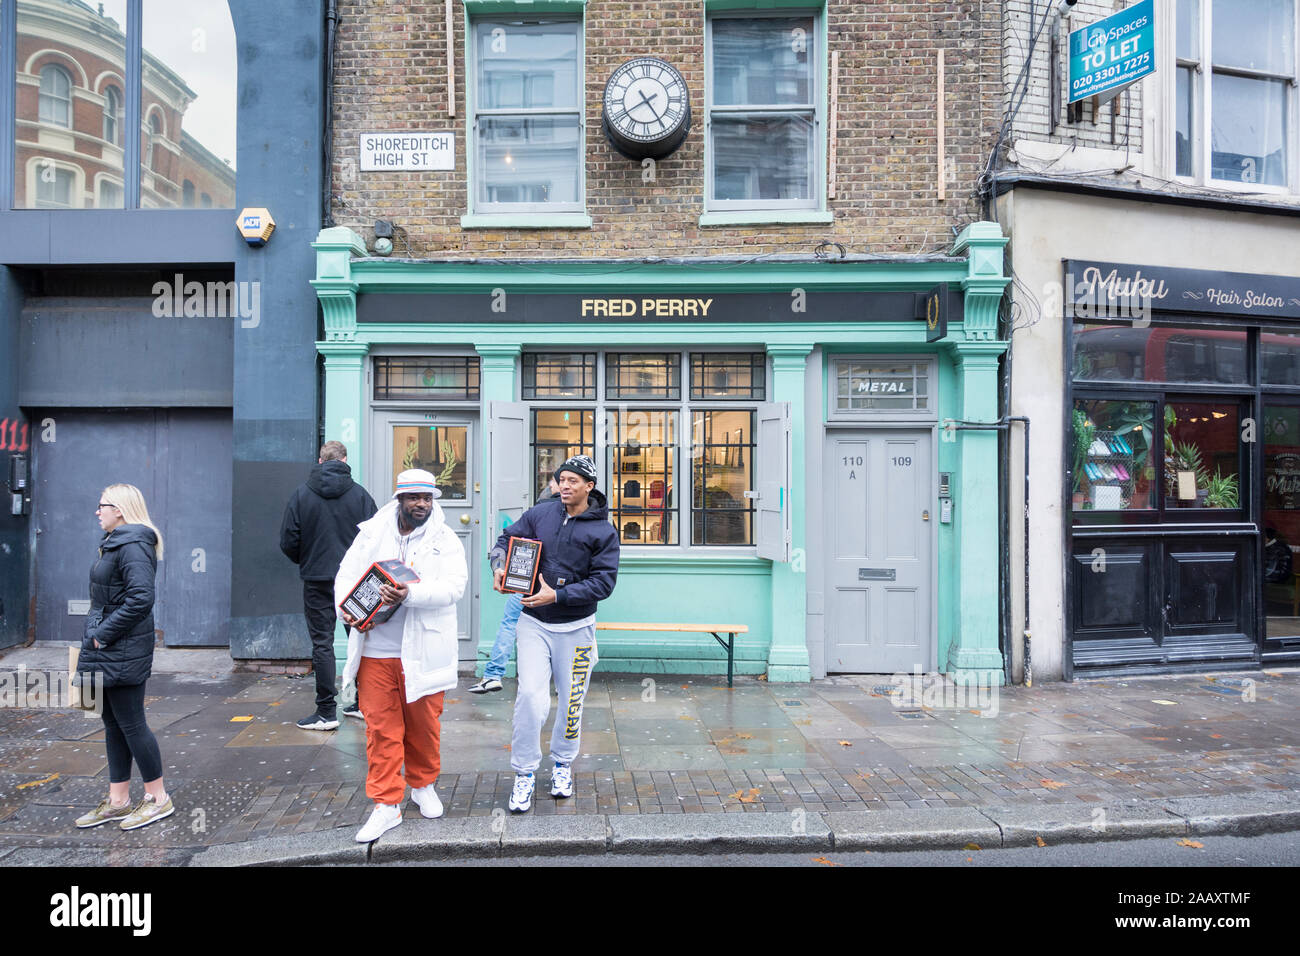 Fred Perry shopfront on Shoreditch High Street, Hackney, London, E1, UK  Stock Photo - Alamy